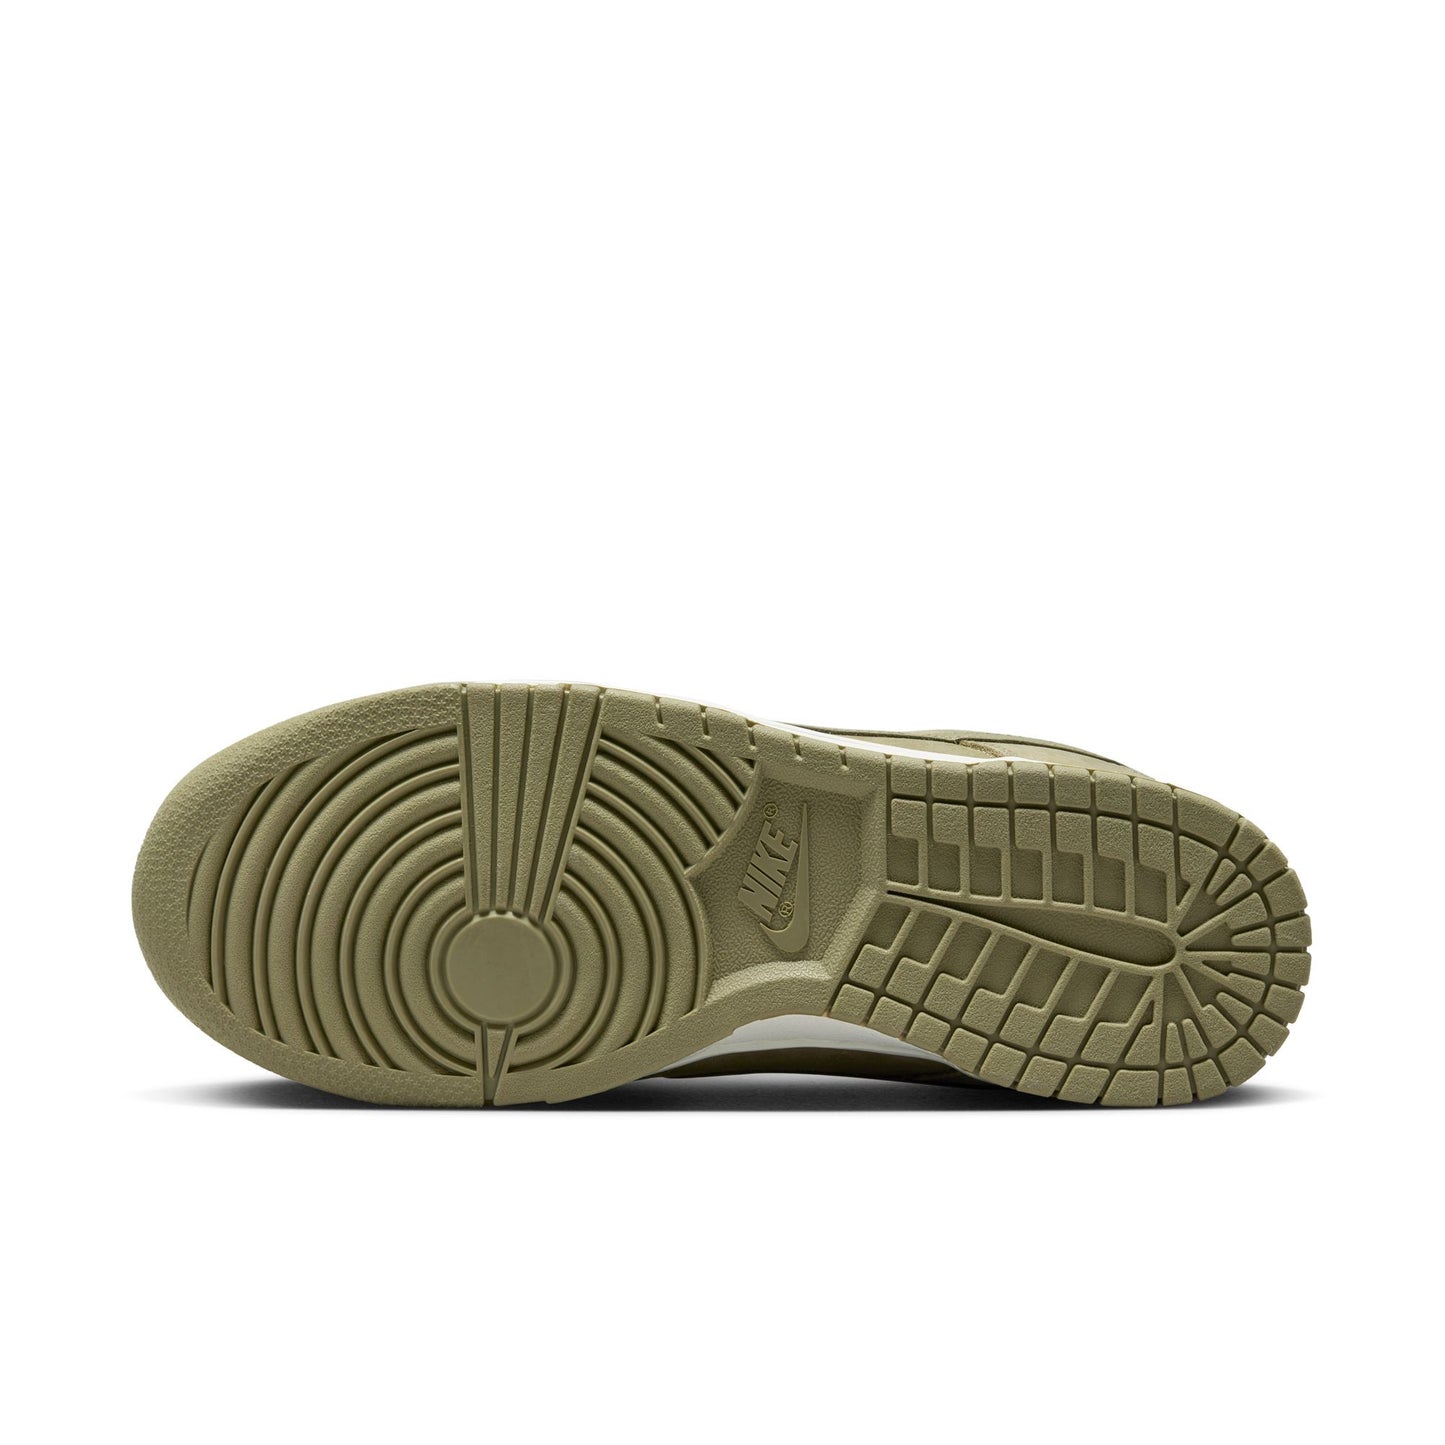 Nike Dunk Low Premium MF "Neutral Olive" - DV7415-200